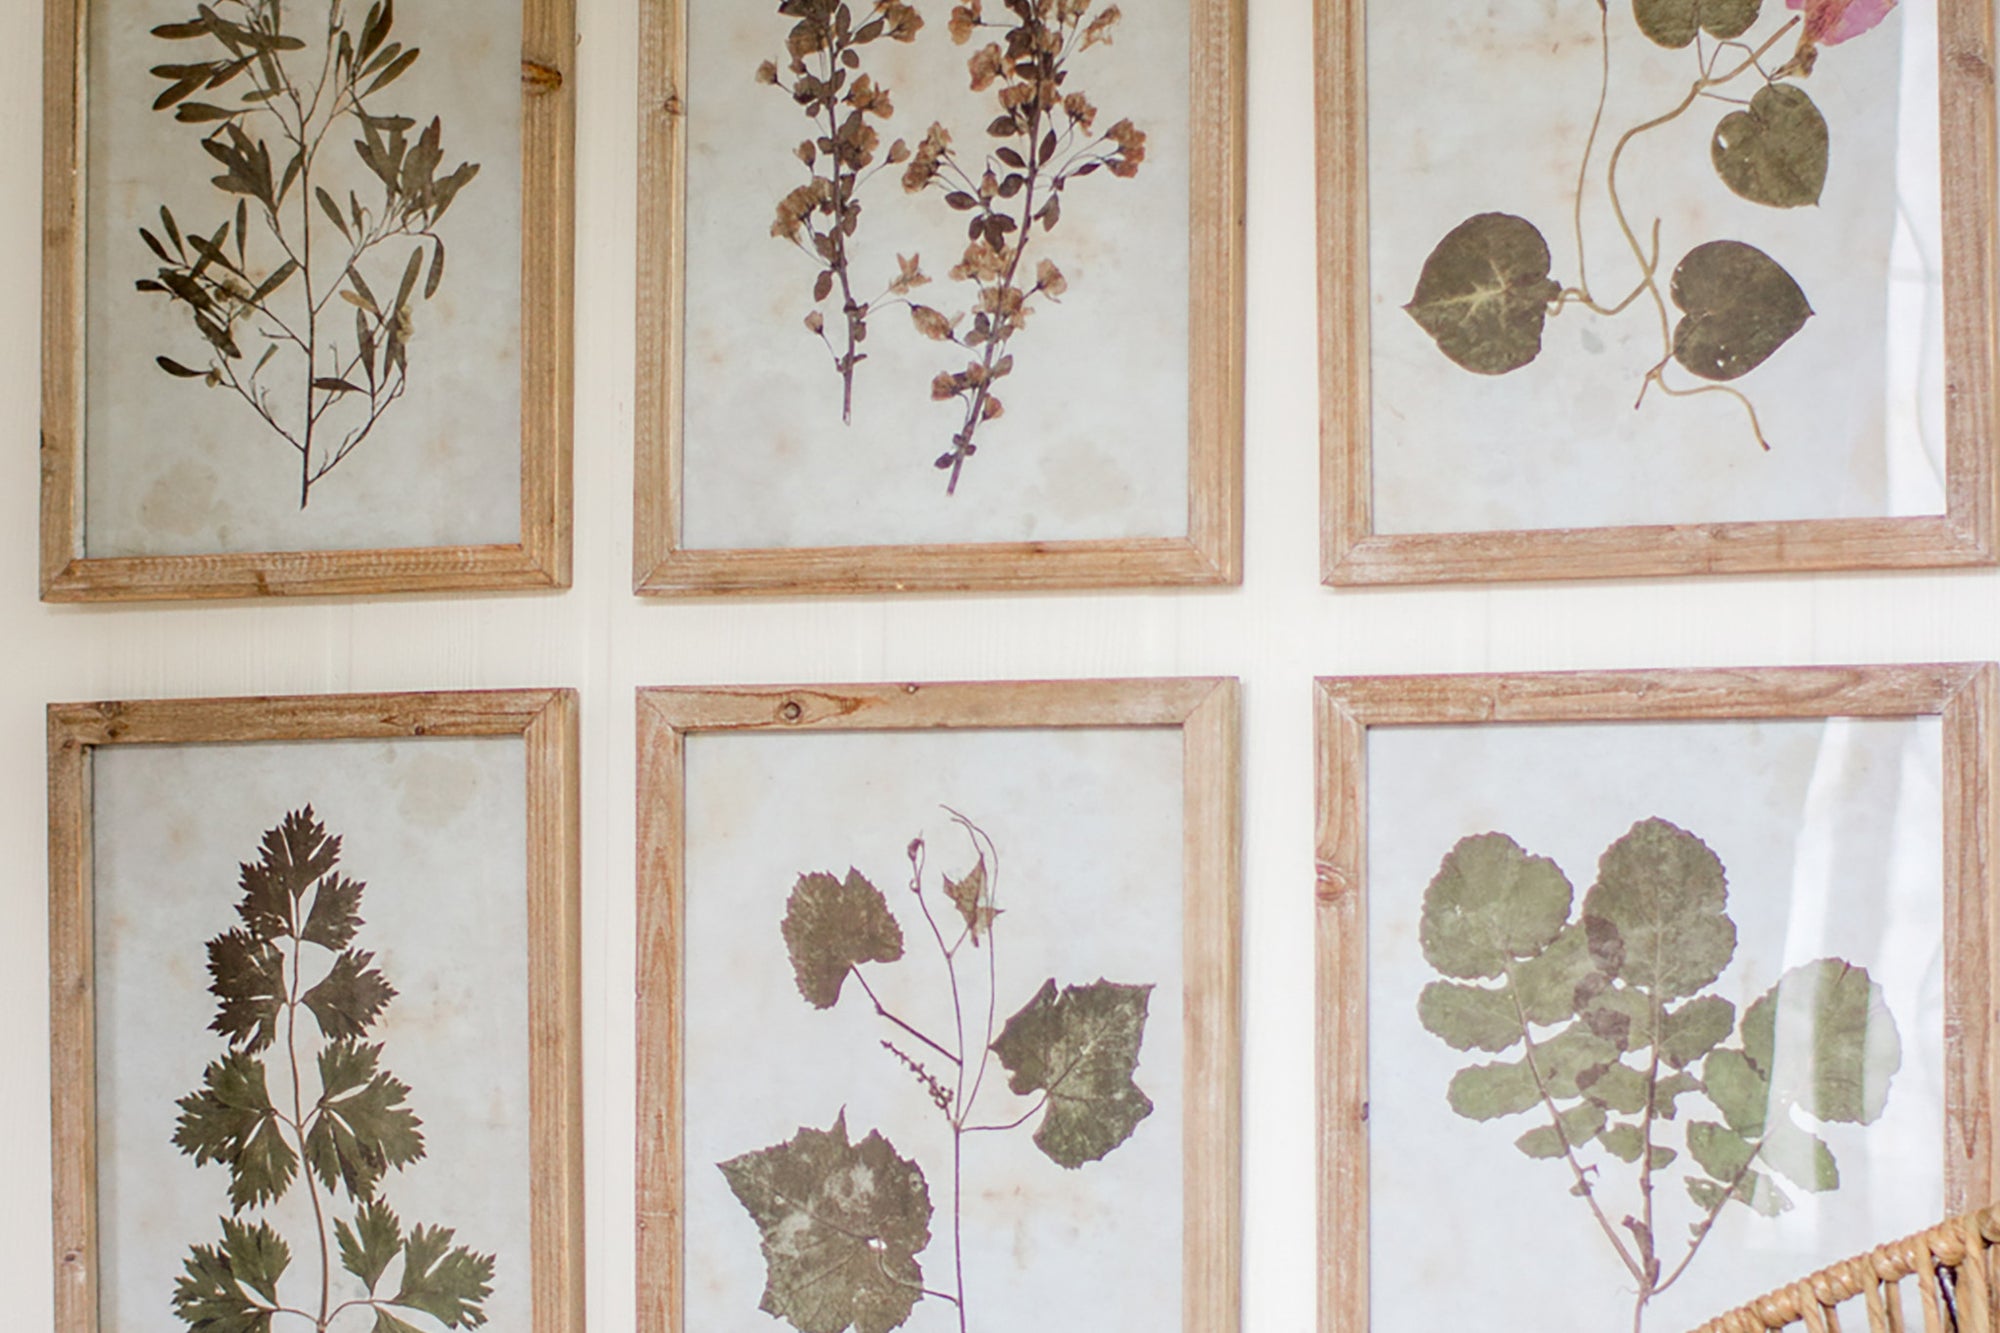 Botanic Leaf Prints With Rustic Wood Frames - Set of 6